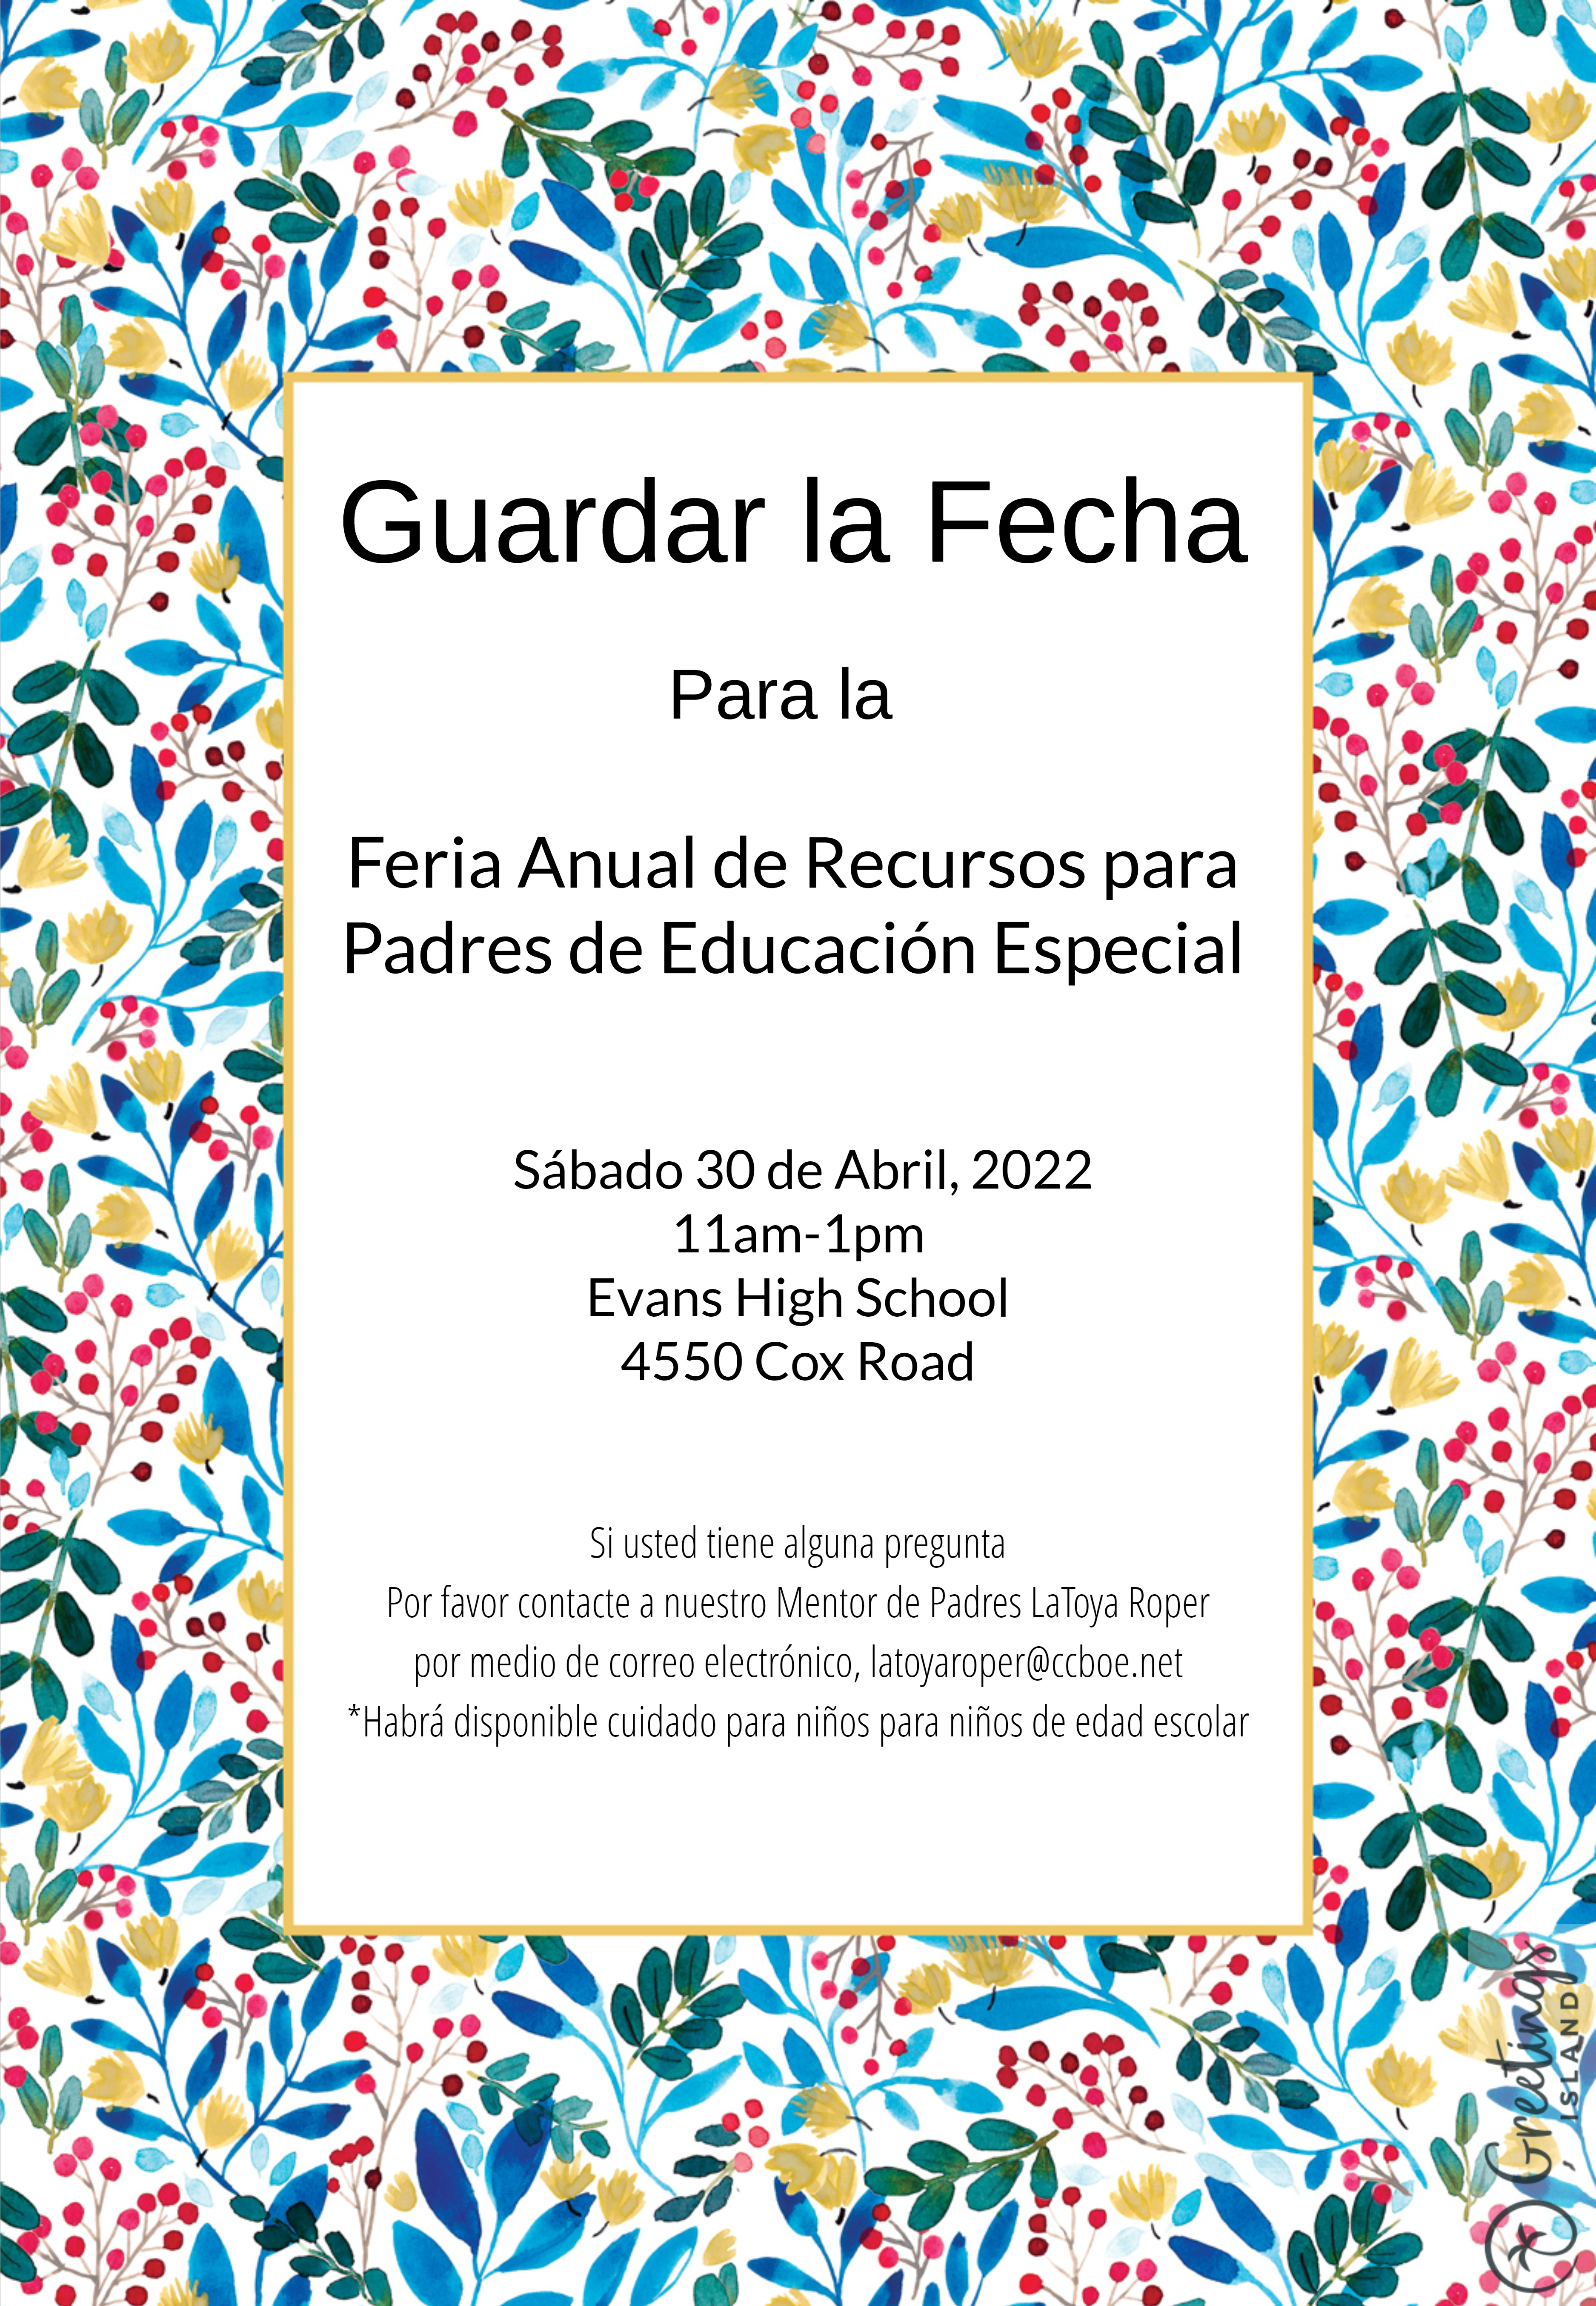 Special Education Parent Resources Fair Information - Spanish